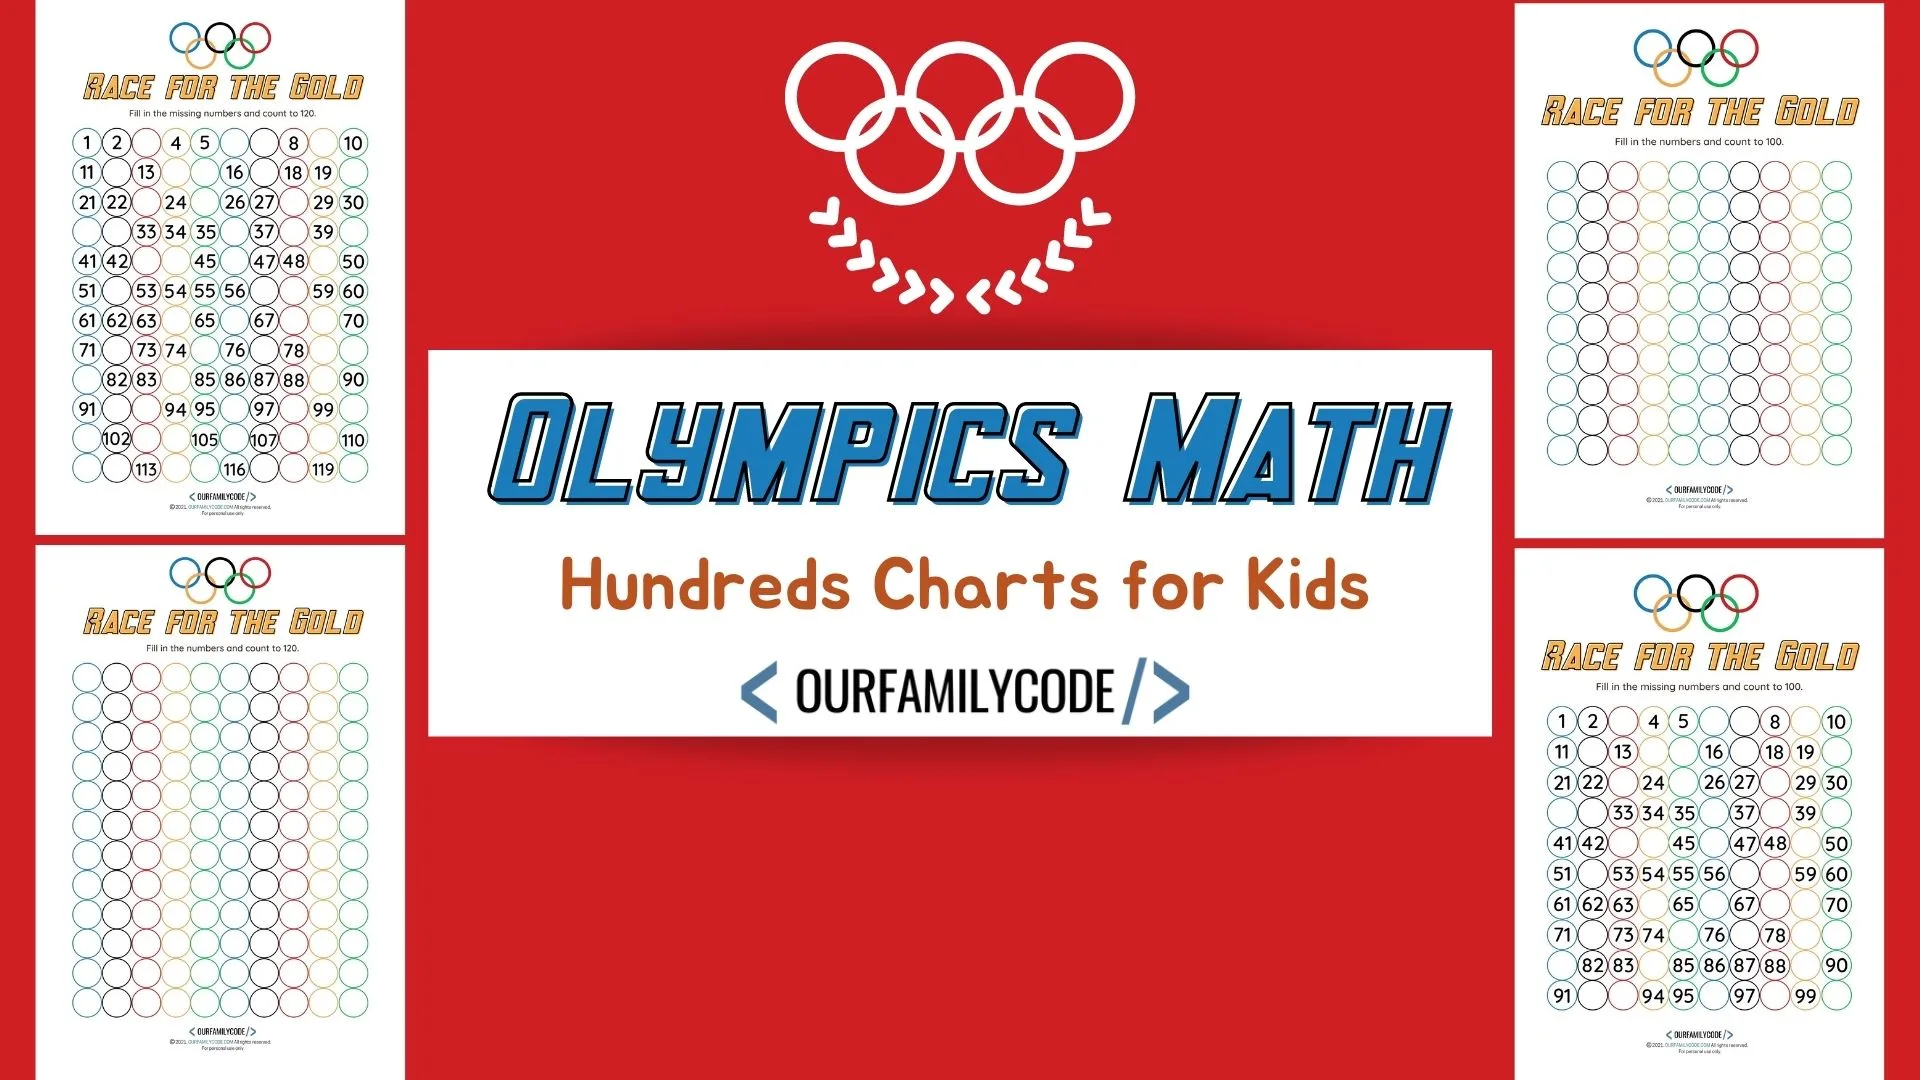 BH FB Olympics Math Hundreds Charts for Kids.jpg